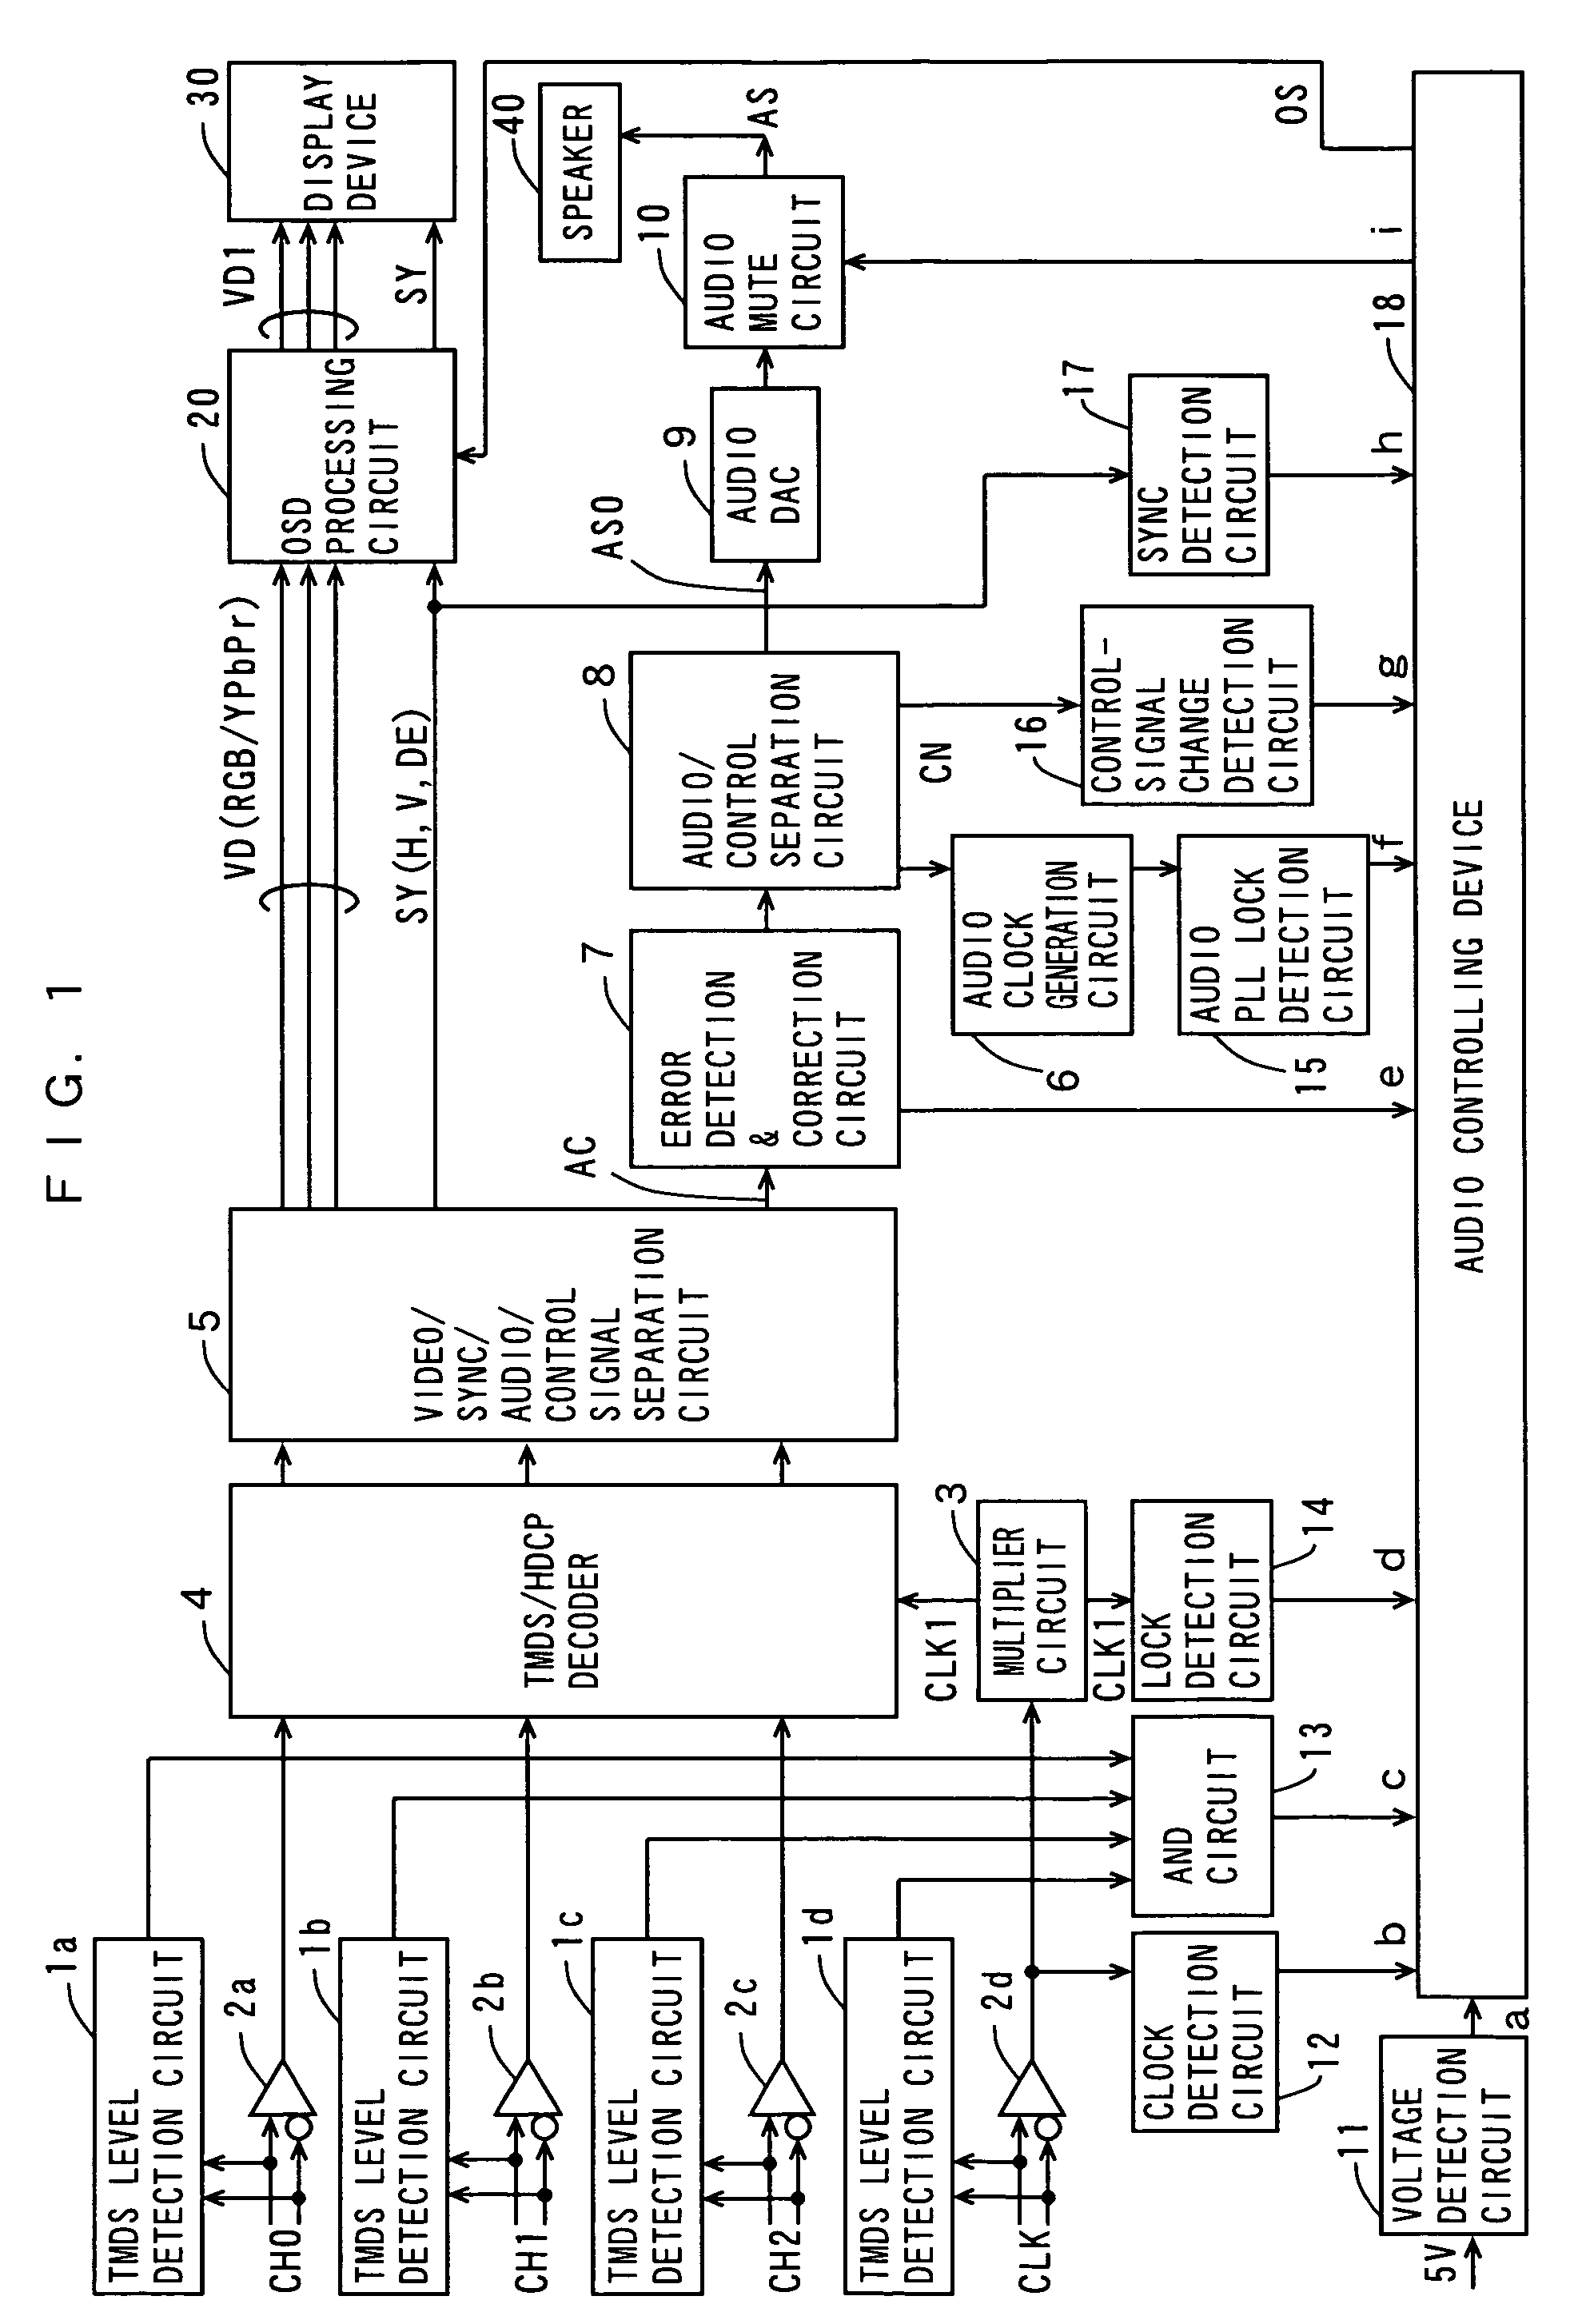 Digital interface receiver apparatus